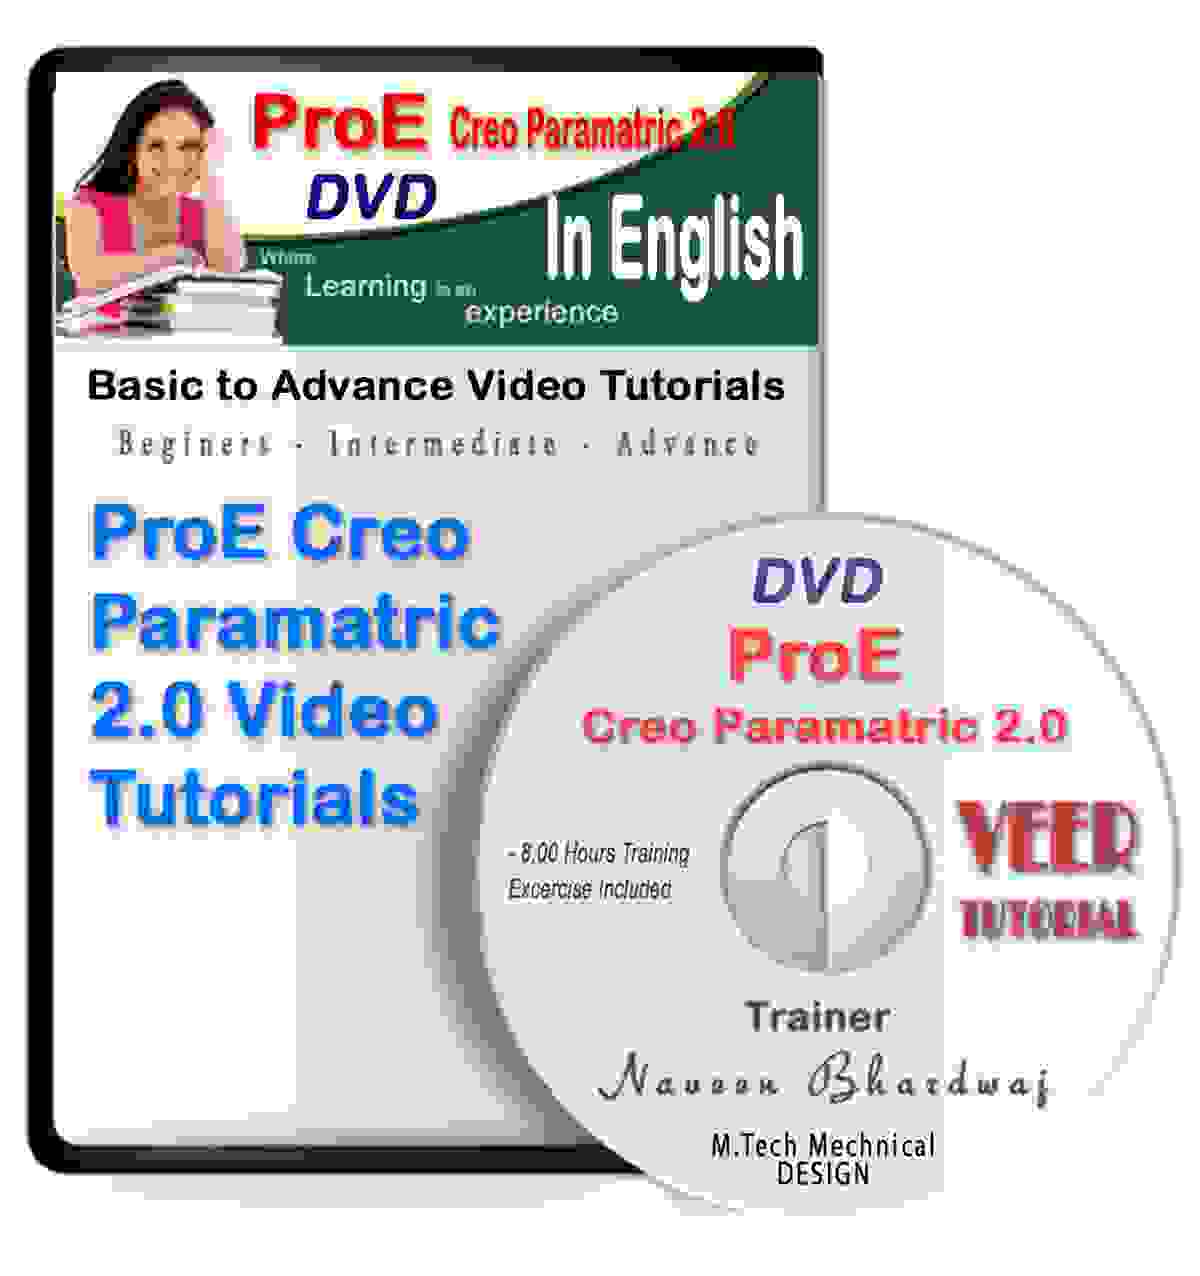 Pro Engineer Creo Tutorial DVD Latest Version Basic to Advance in English Training Video